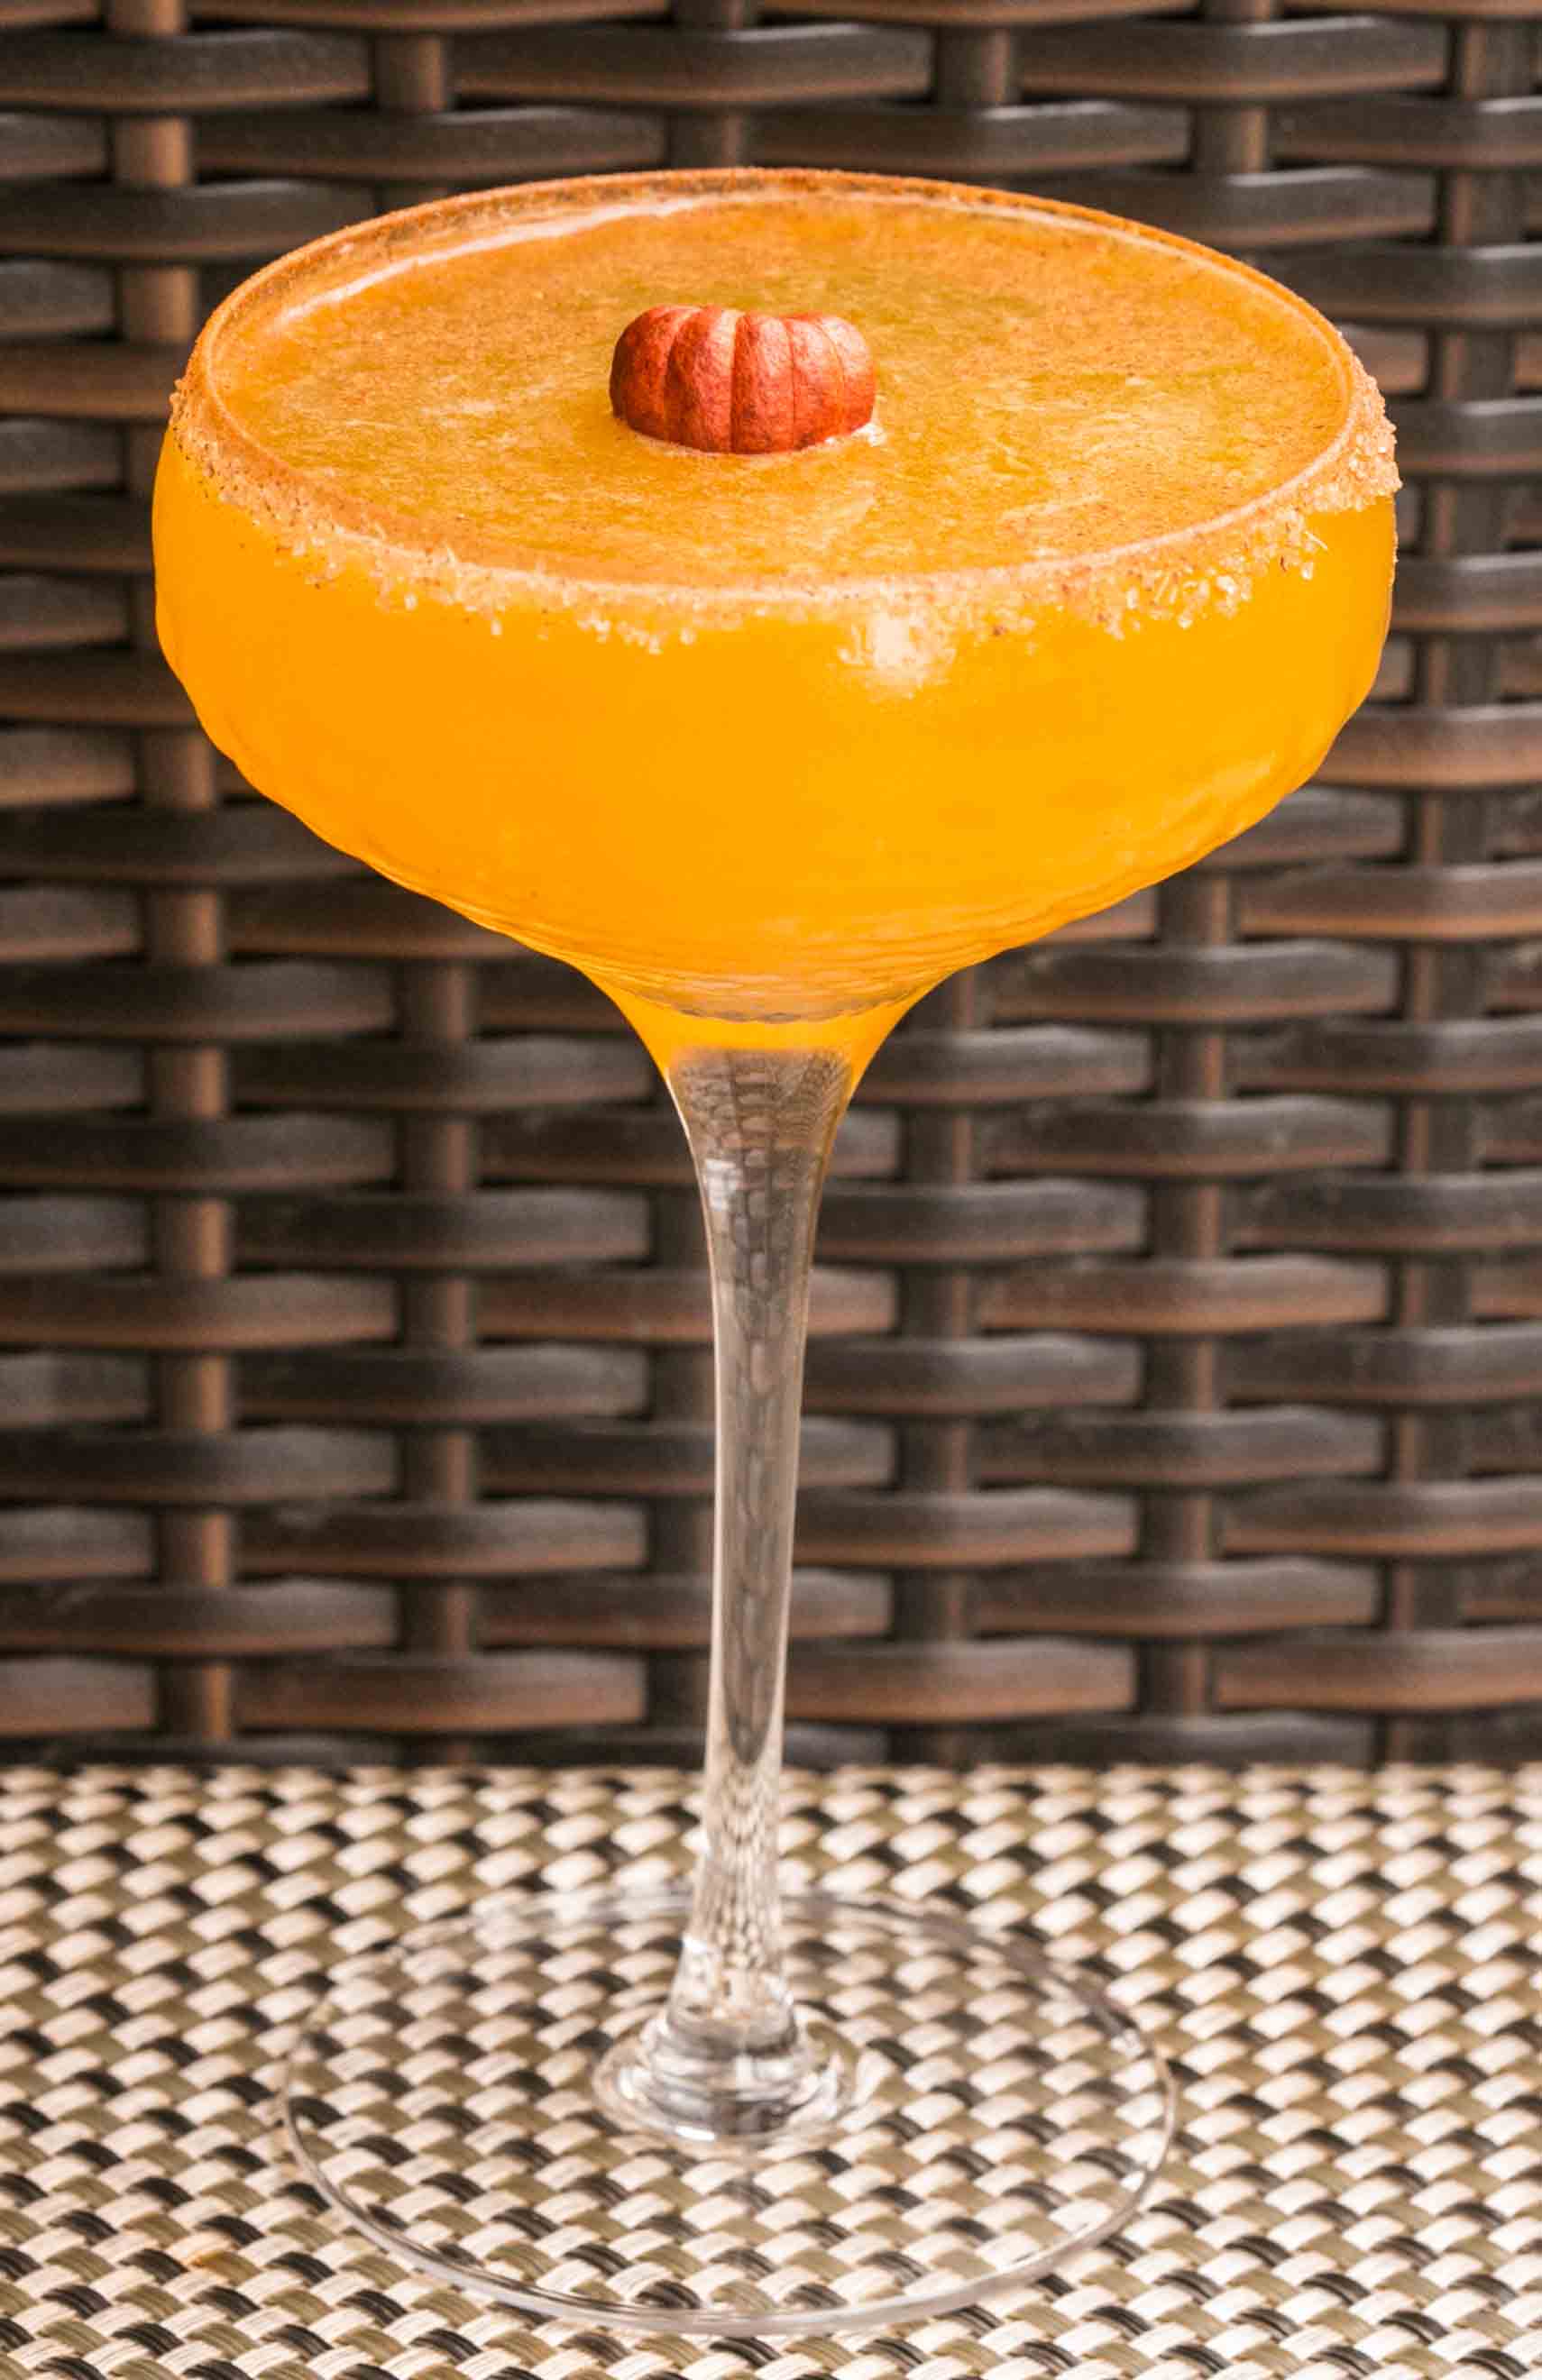 Smashing Pumpkin Cocktail - The US Grant Hotel recipe